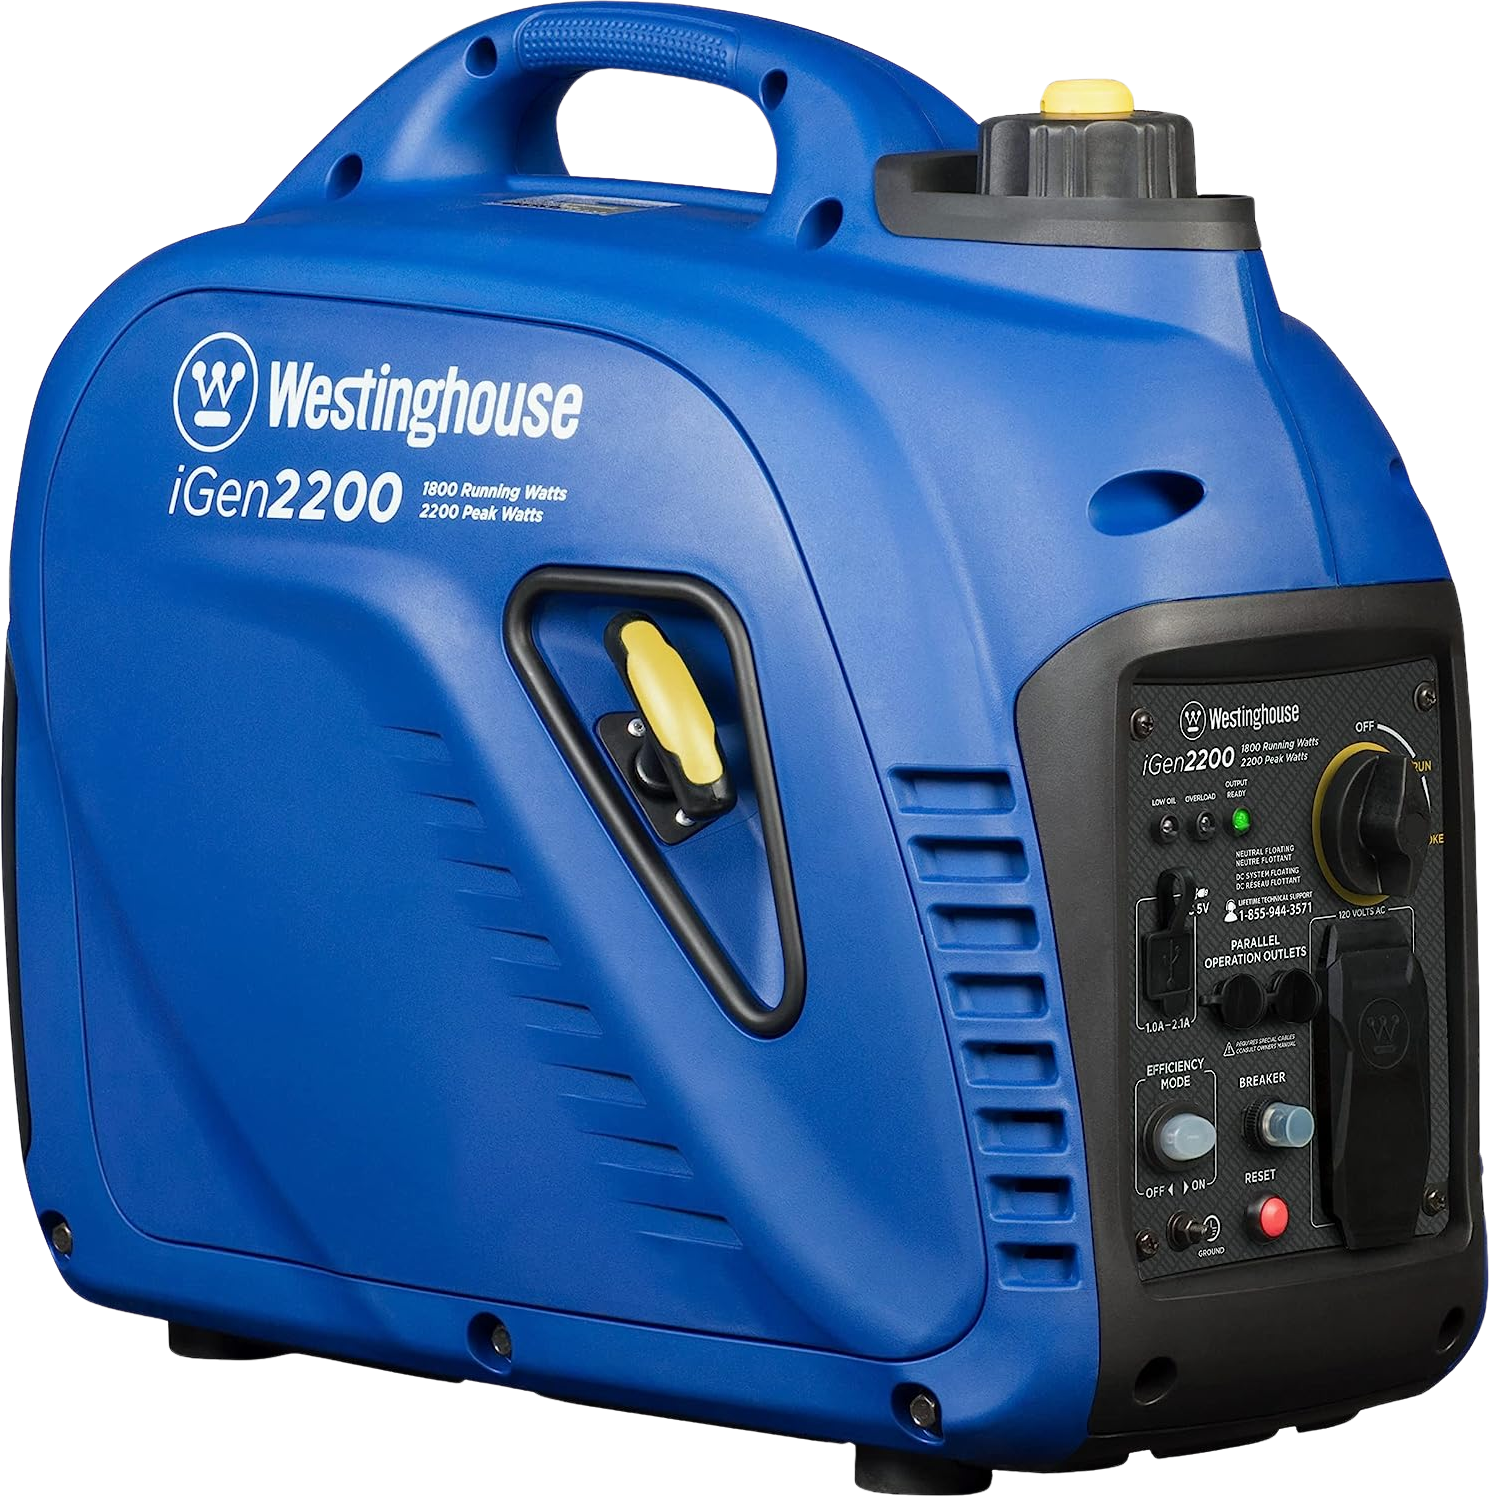 Westinghouse, Westinghouse iGen2200c Inverter Generator 1800W/2200W 20 Amp Recoil Start Gas with CO Sensor New